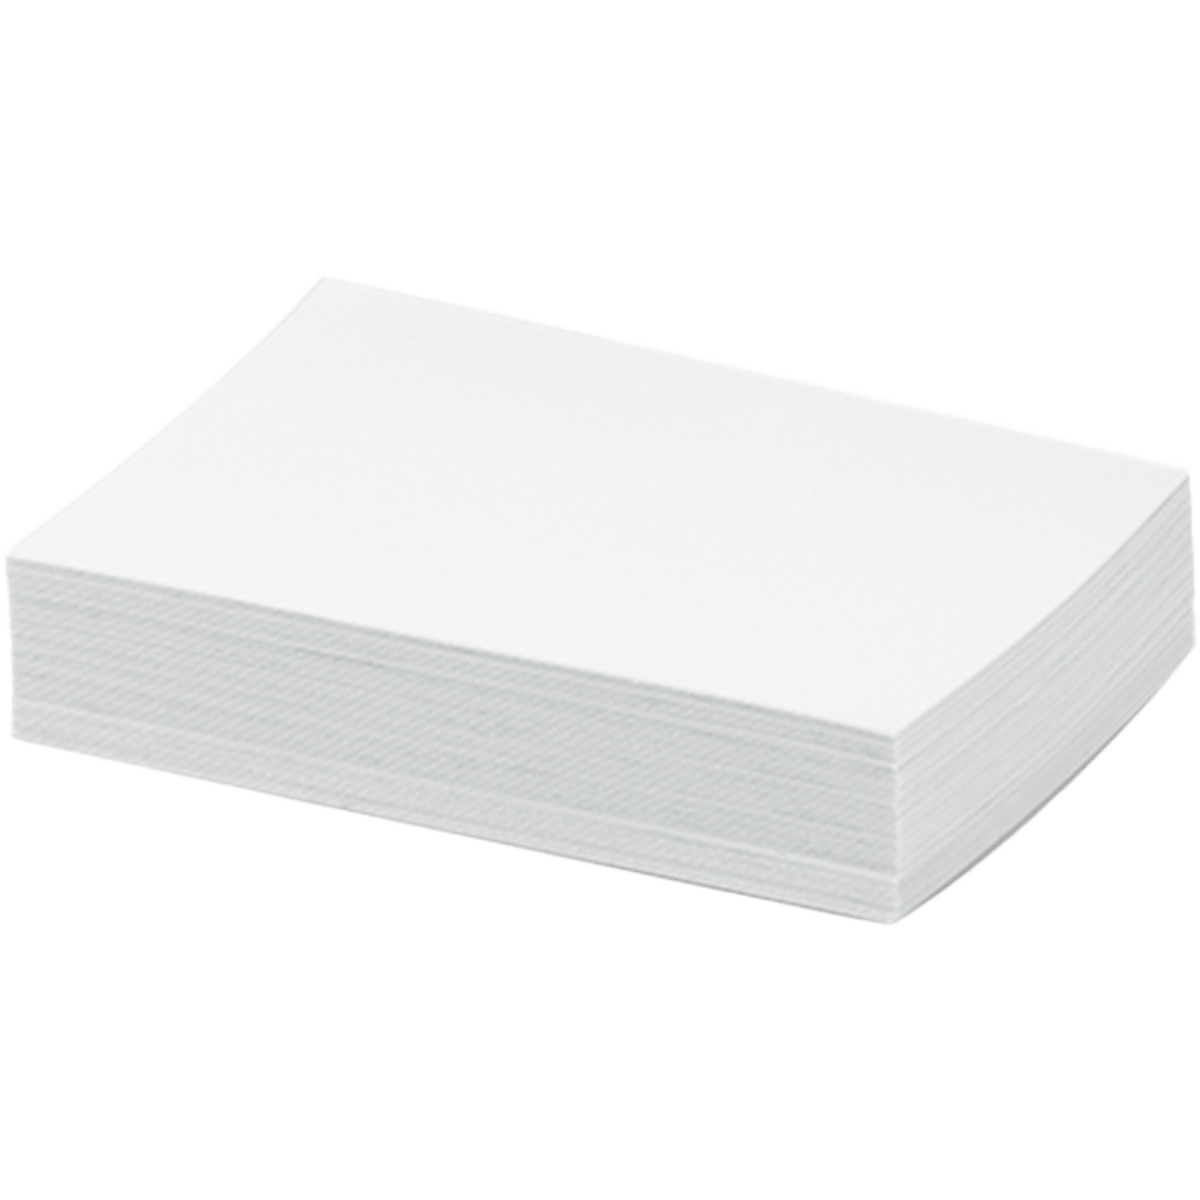 'Mi Portable Photo Printer Paper (2x3-inch 20-sheets דפים עבור מדפסת מיני '